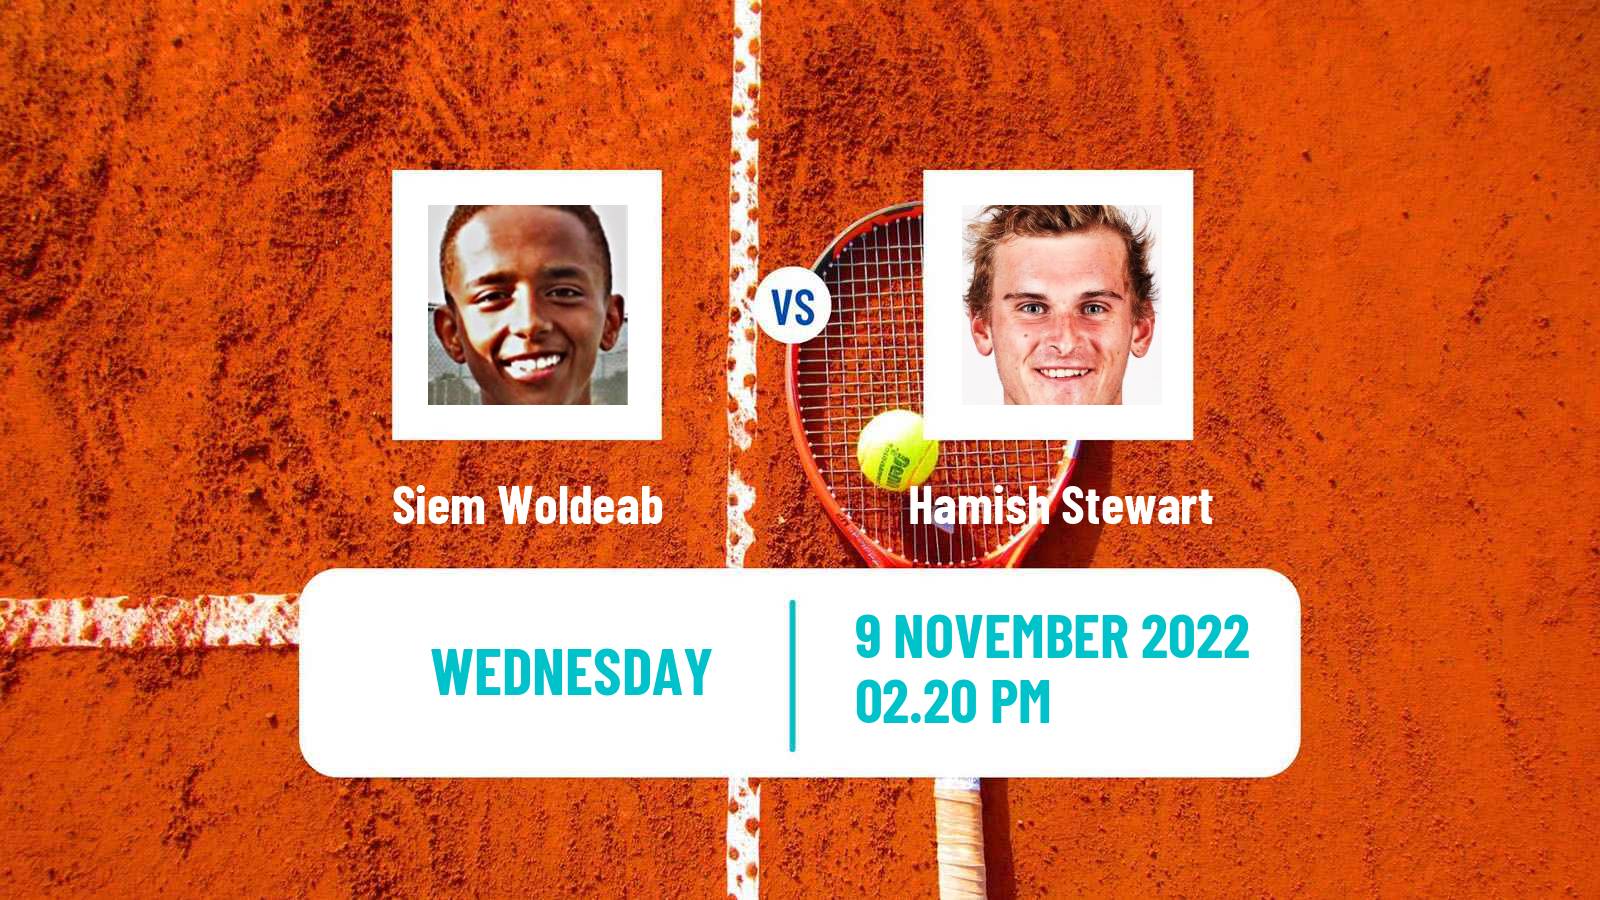 Tennis ITF Tournaments Siem Woldeab - Hamish Stewart